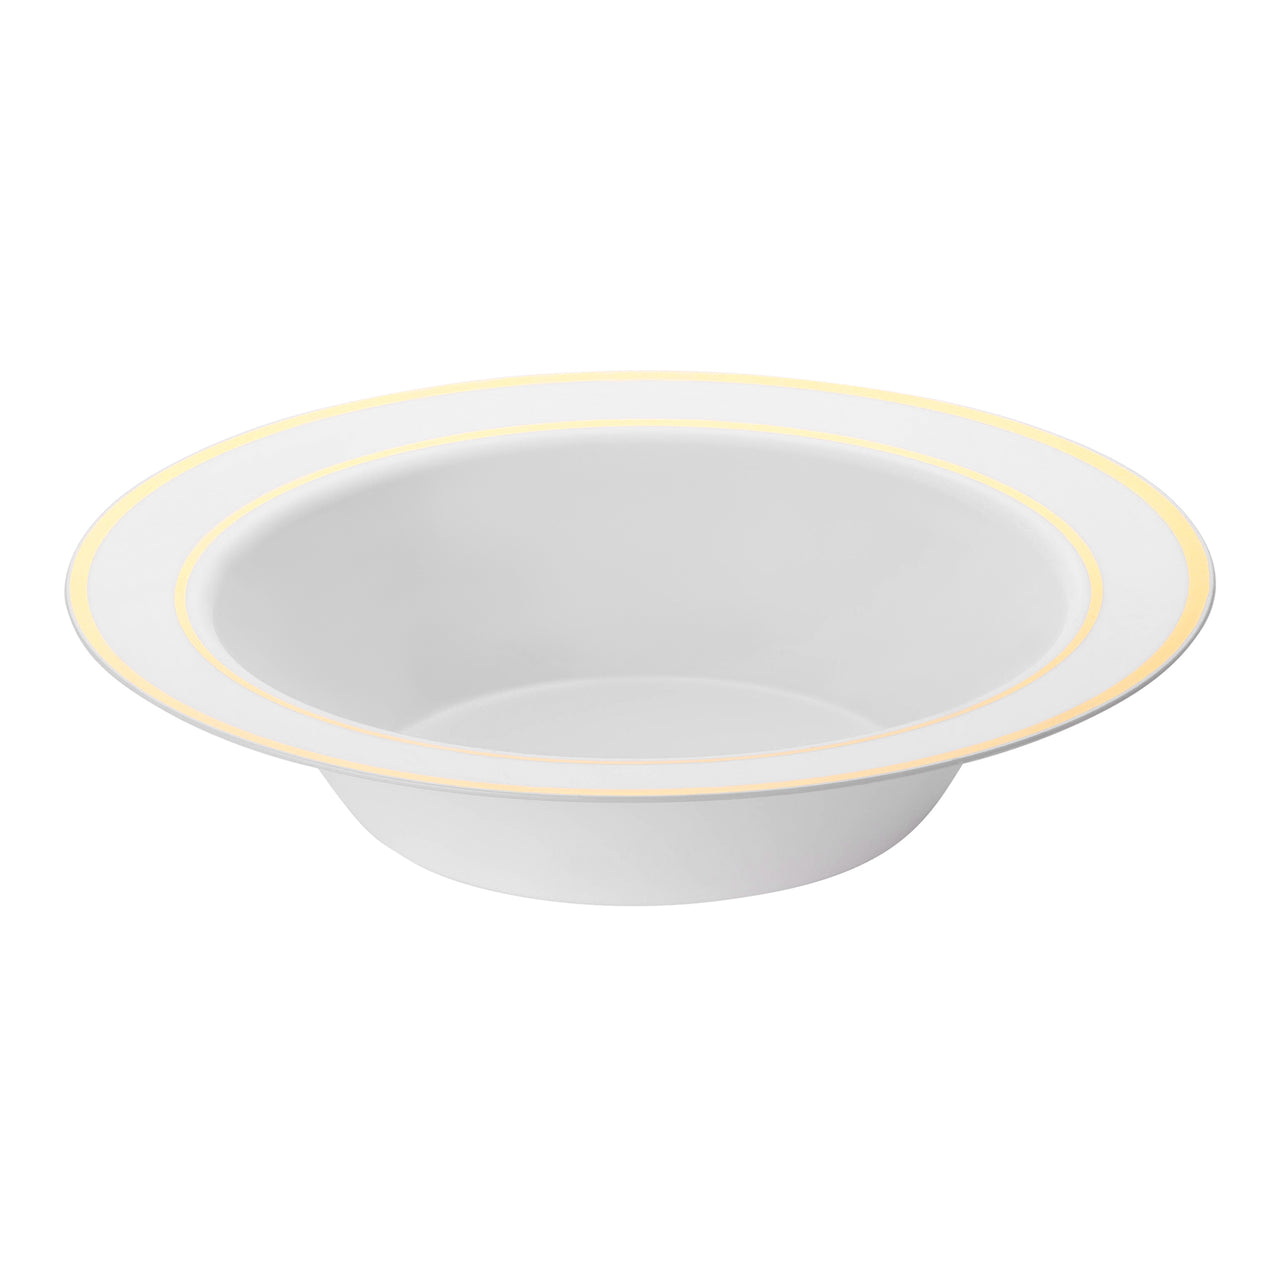 White with Gold Edge Rim Plastic Soup Bowls (12 oz.)